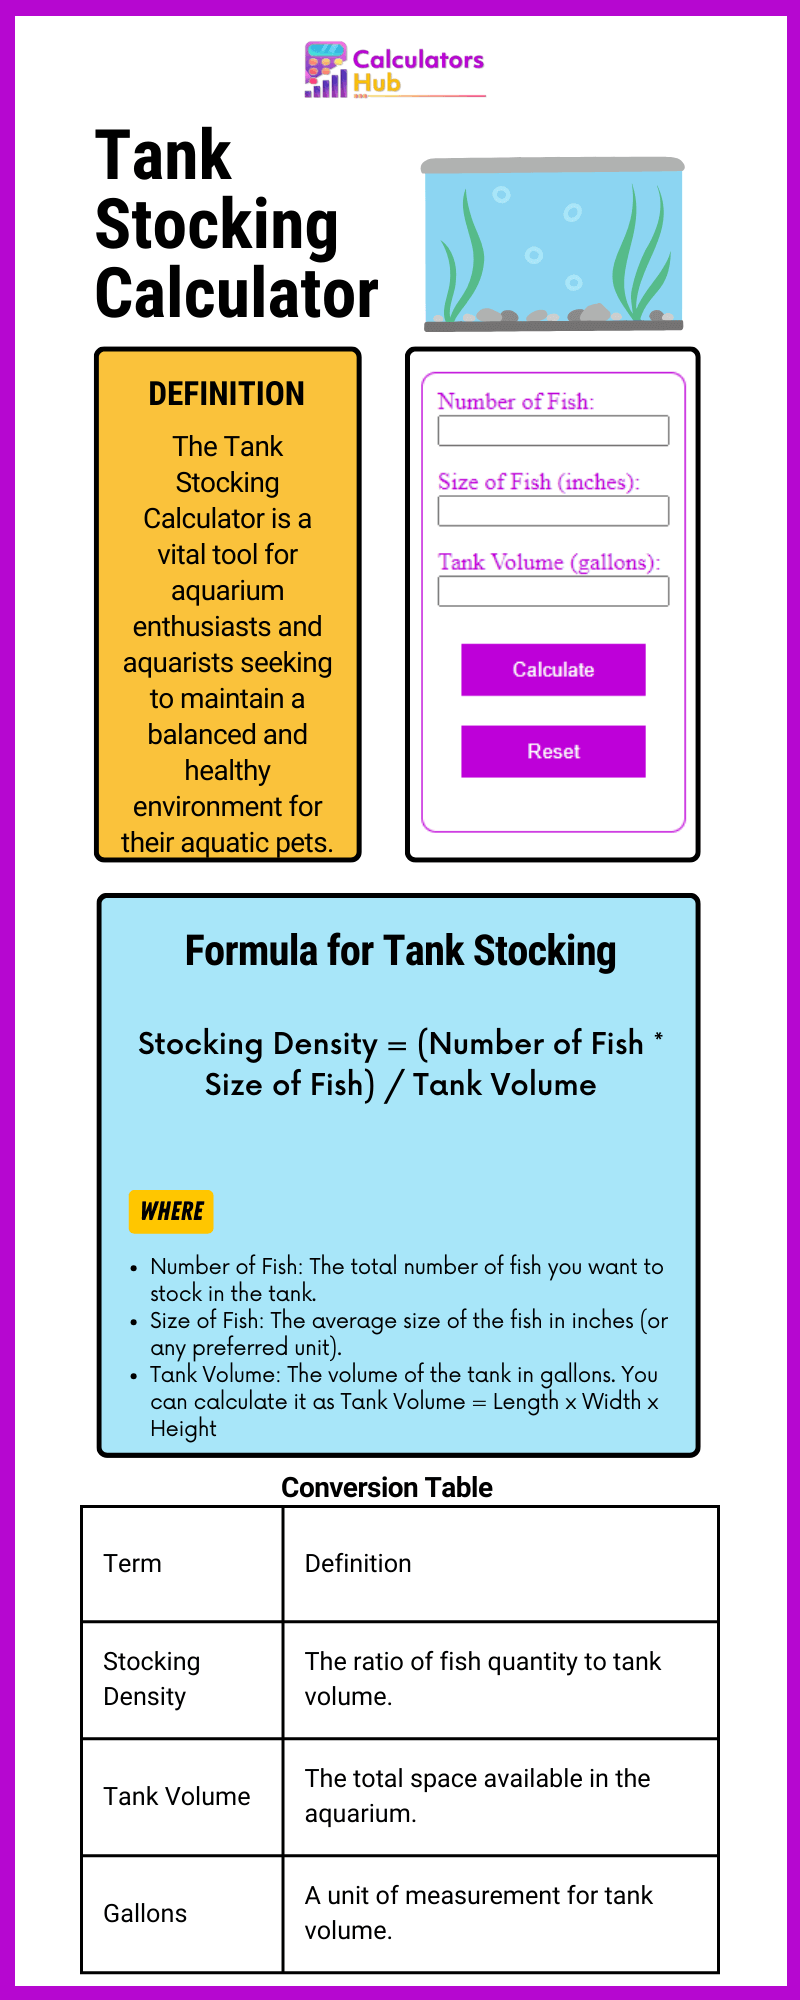 Tank Stocking Calculator